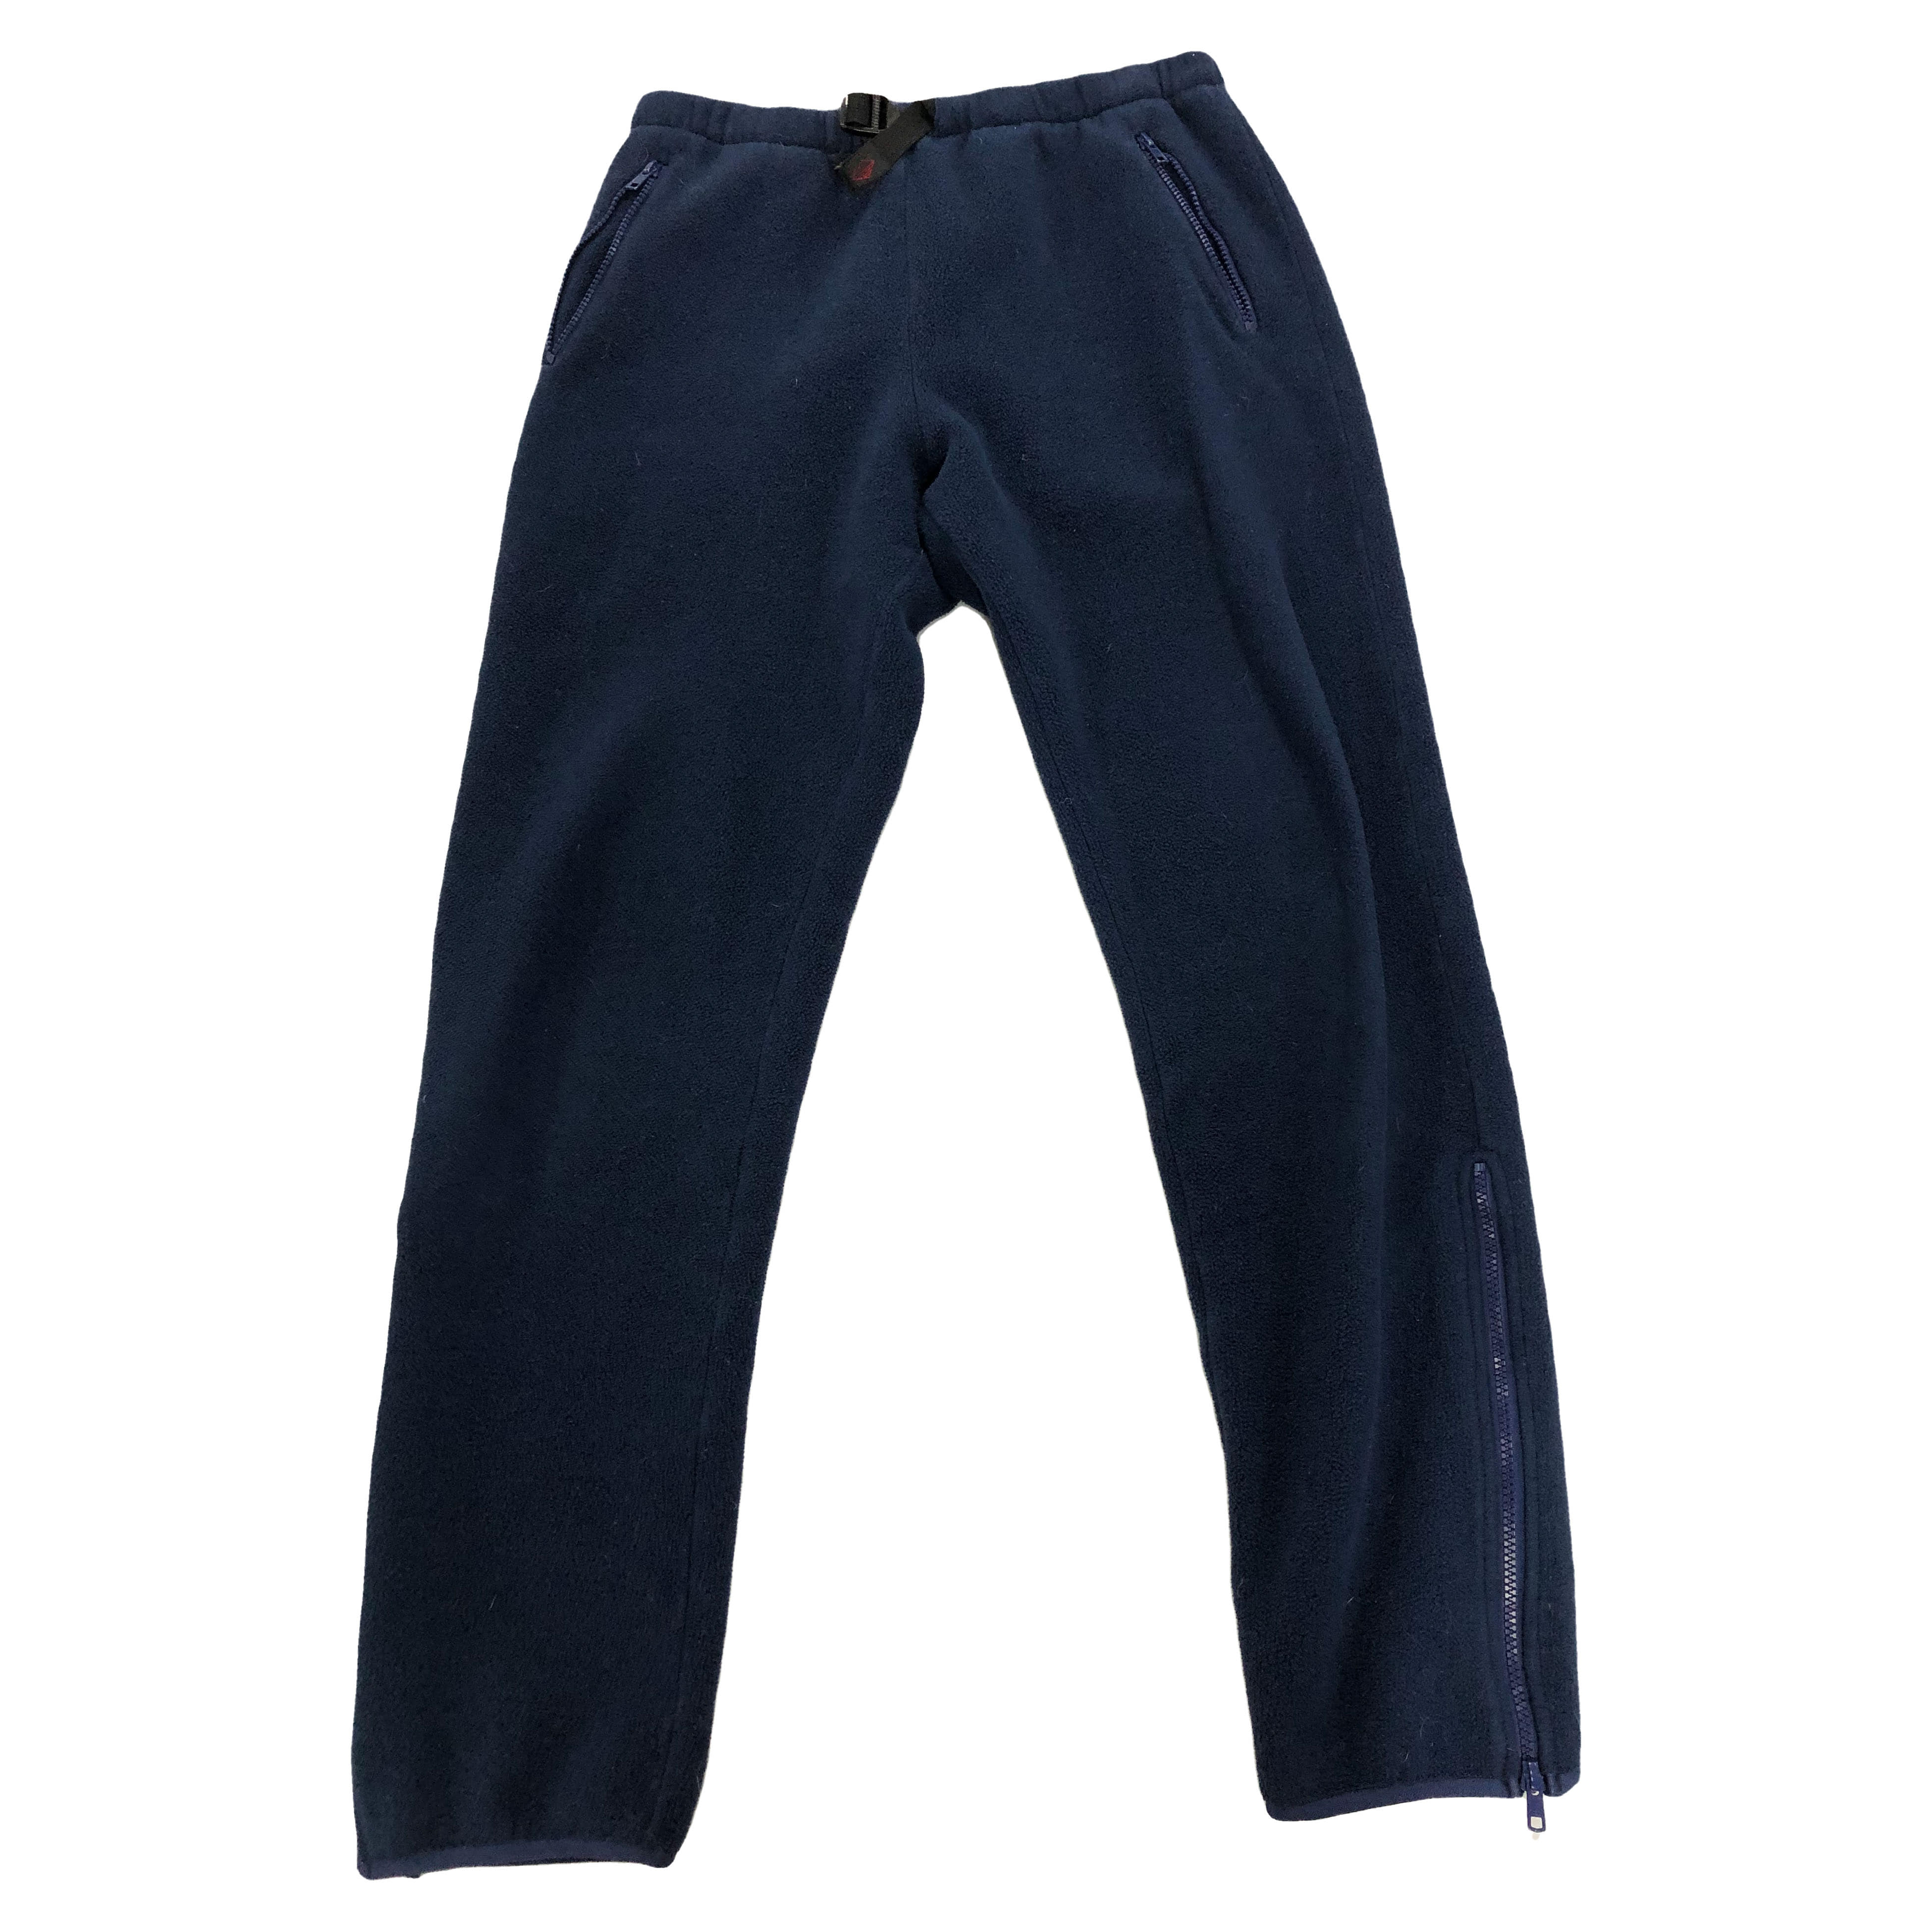 [Battenware] Navy Sweatpants - Size M